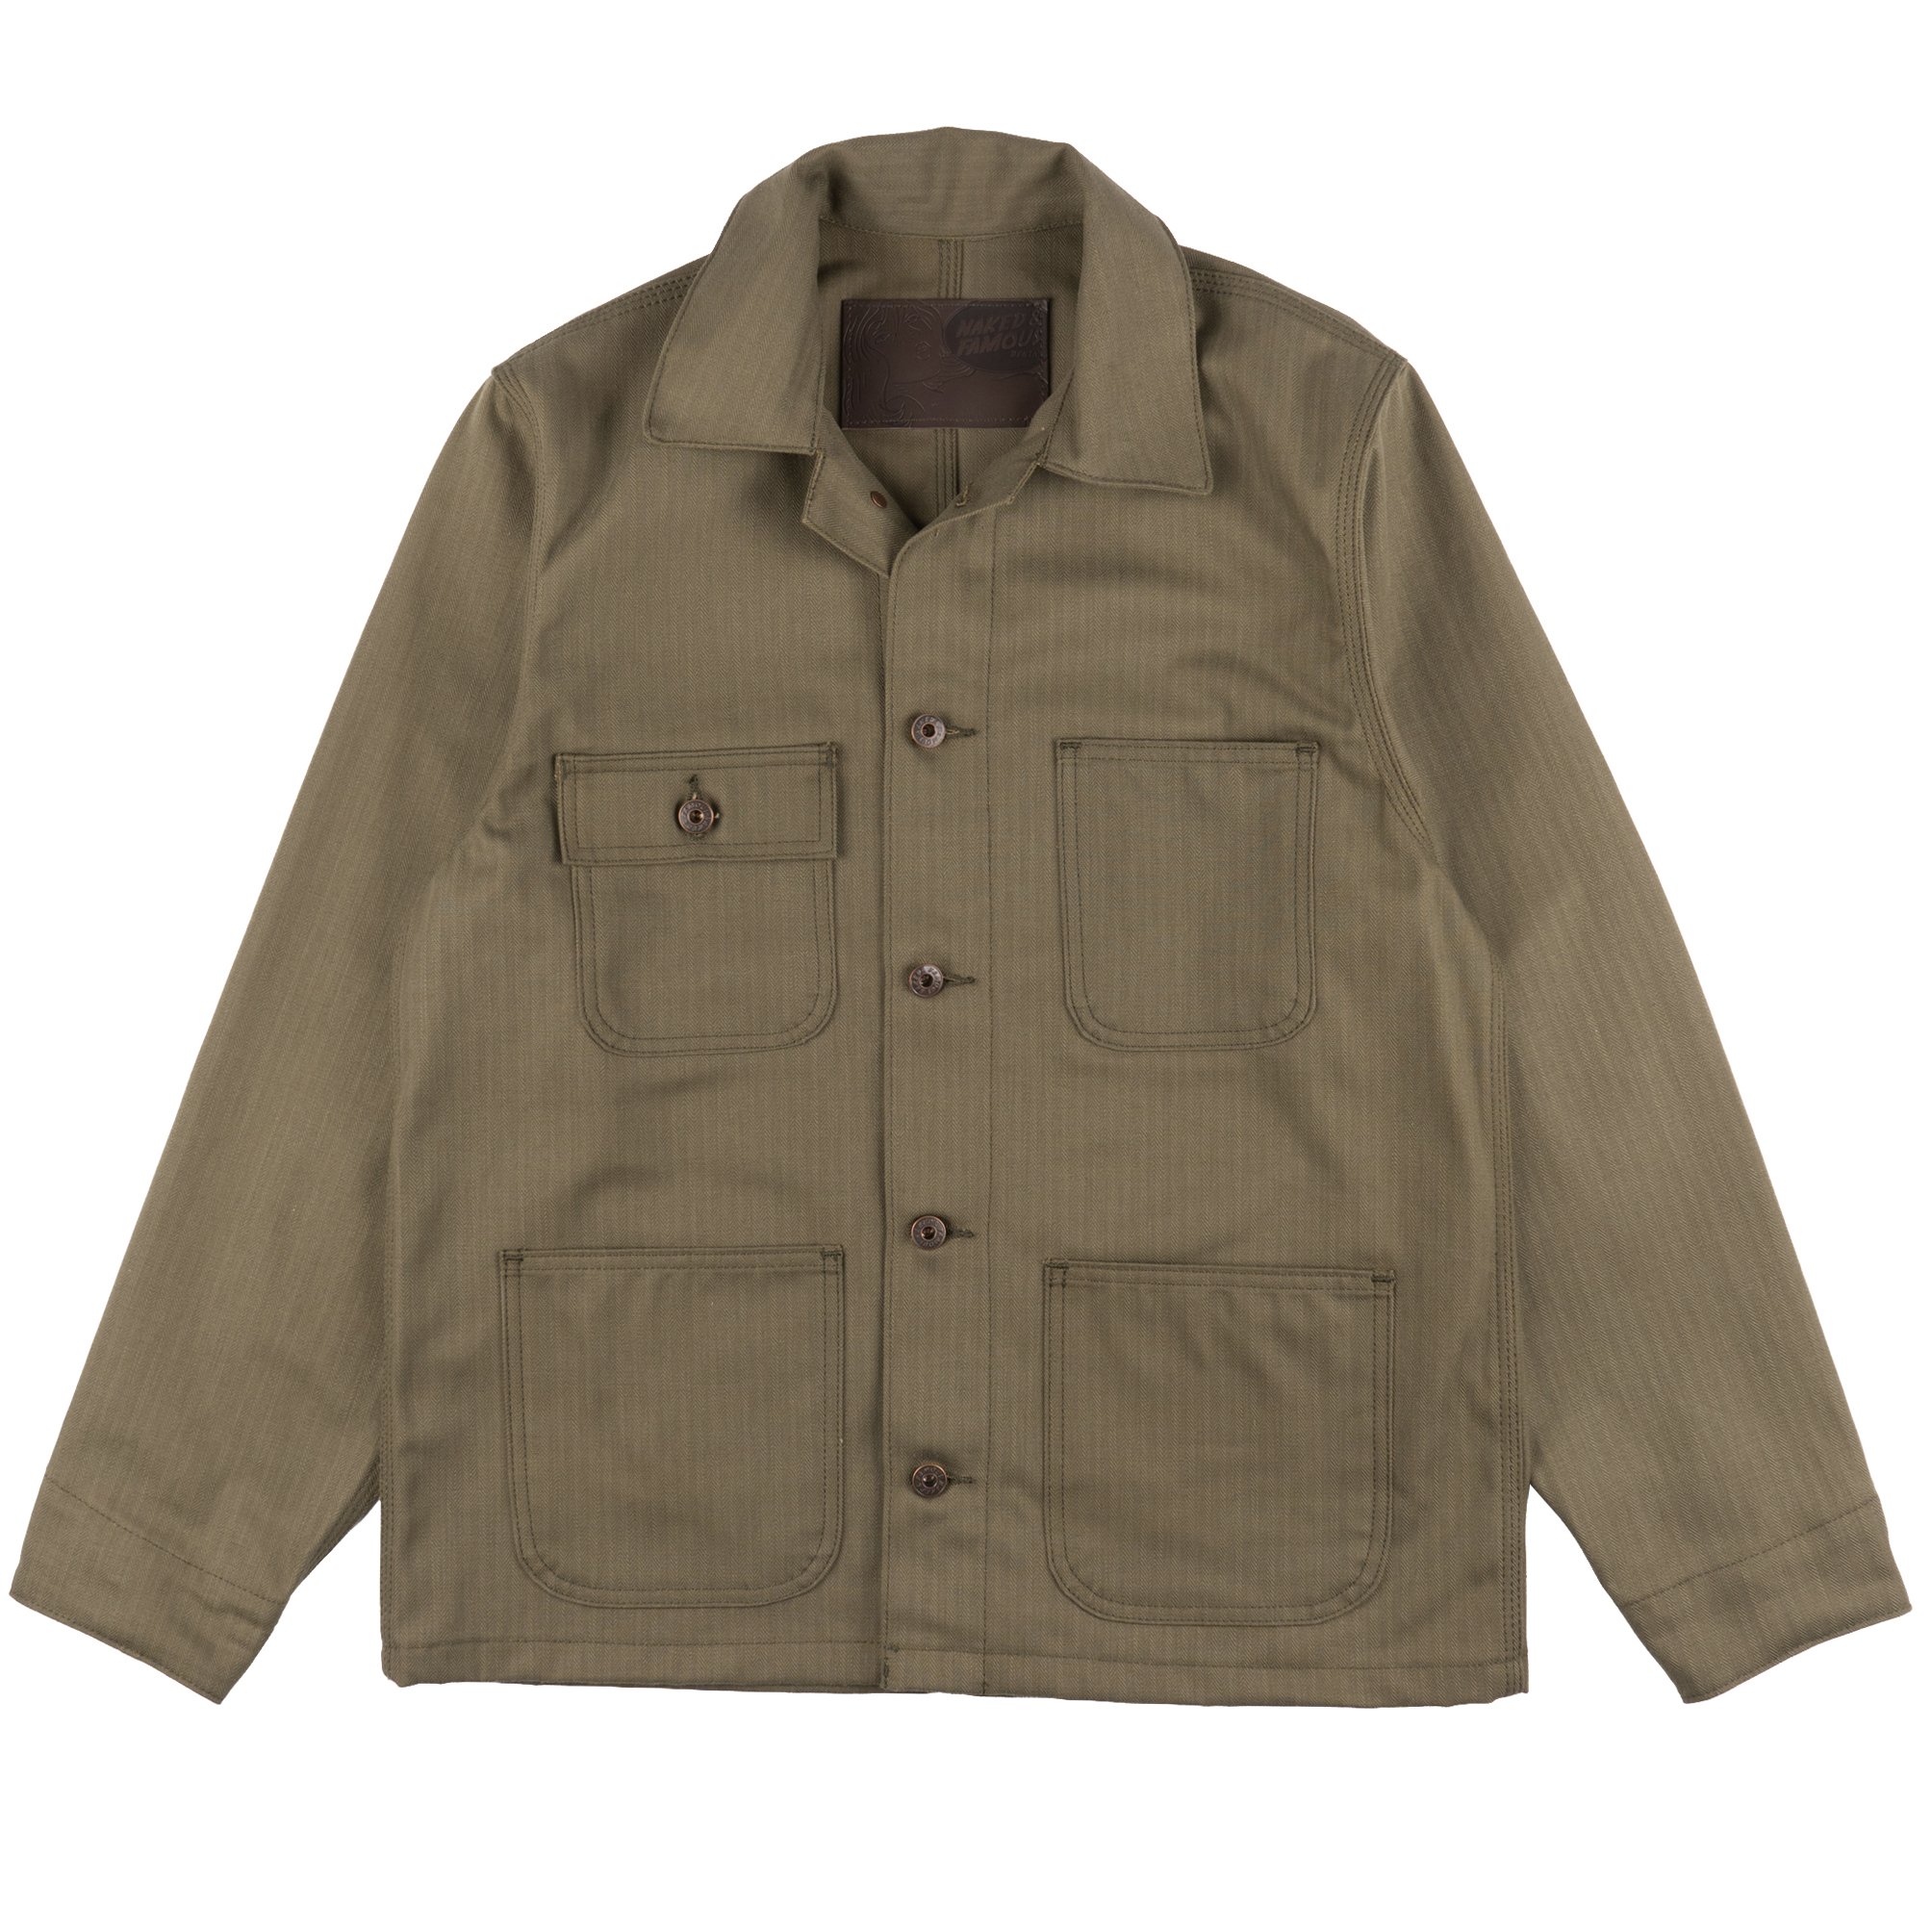  Army HBT - Olive Drab - Chore Coat 